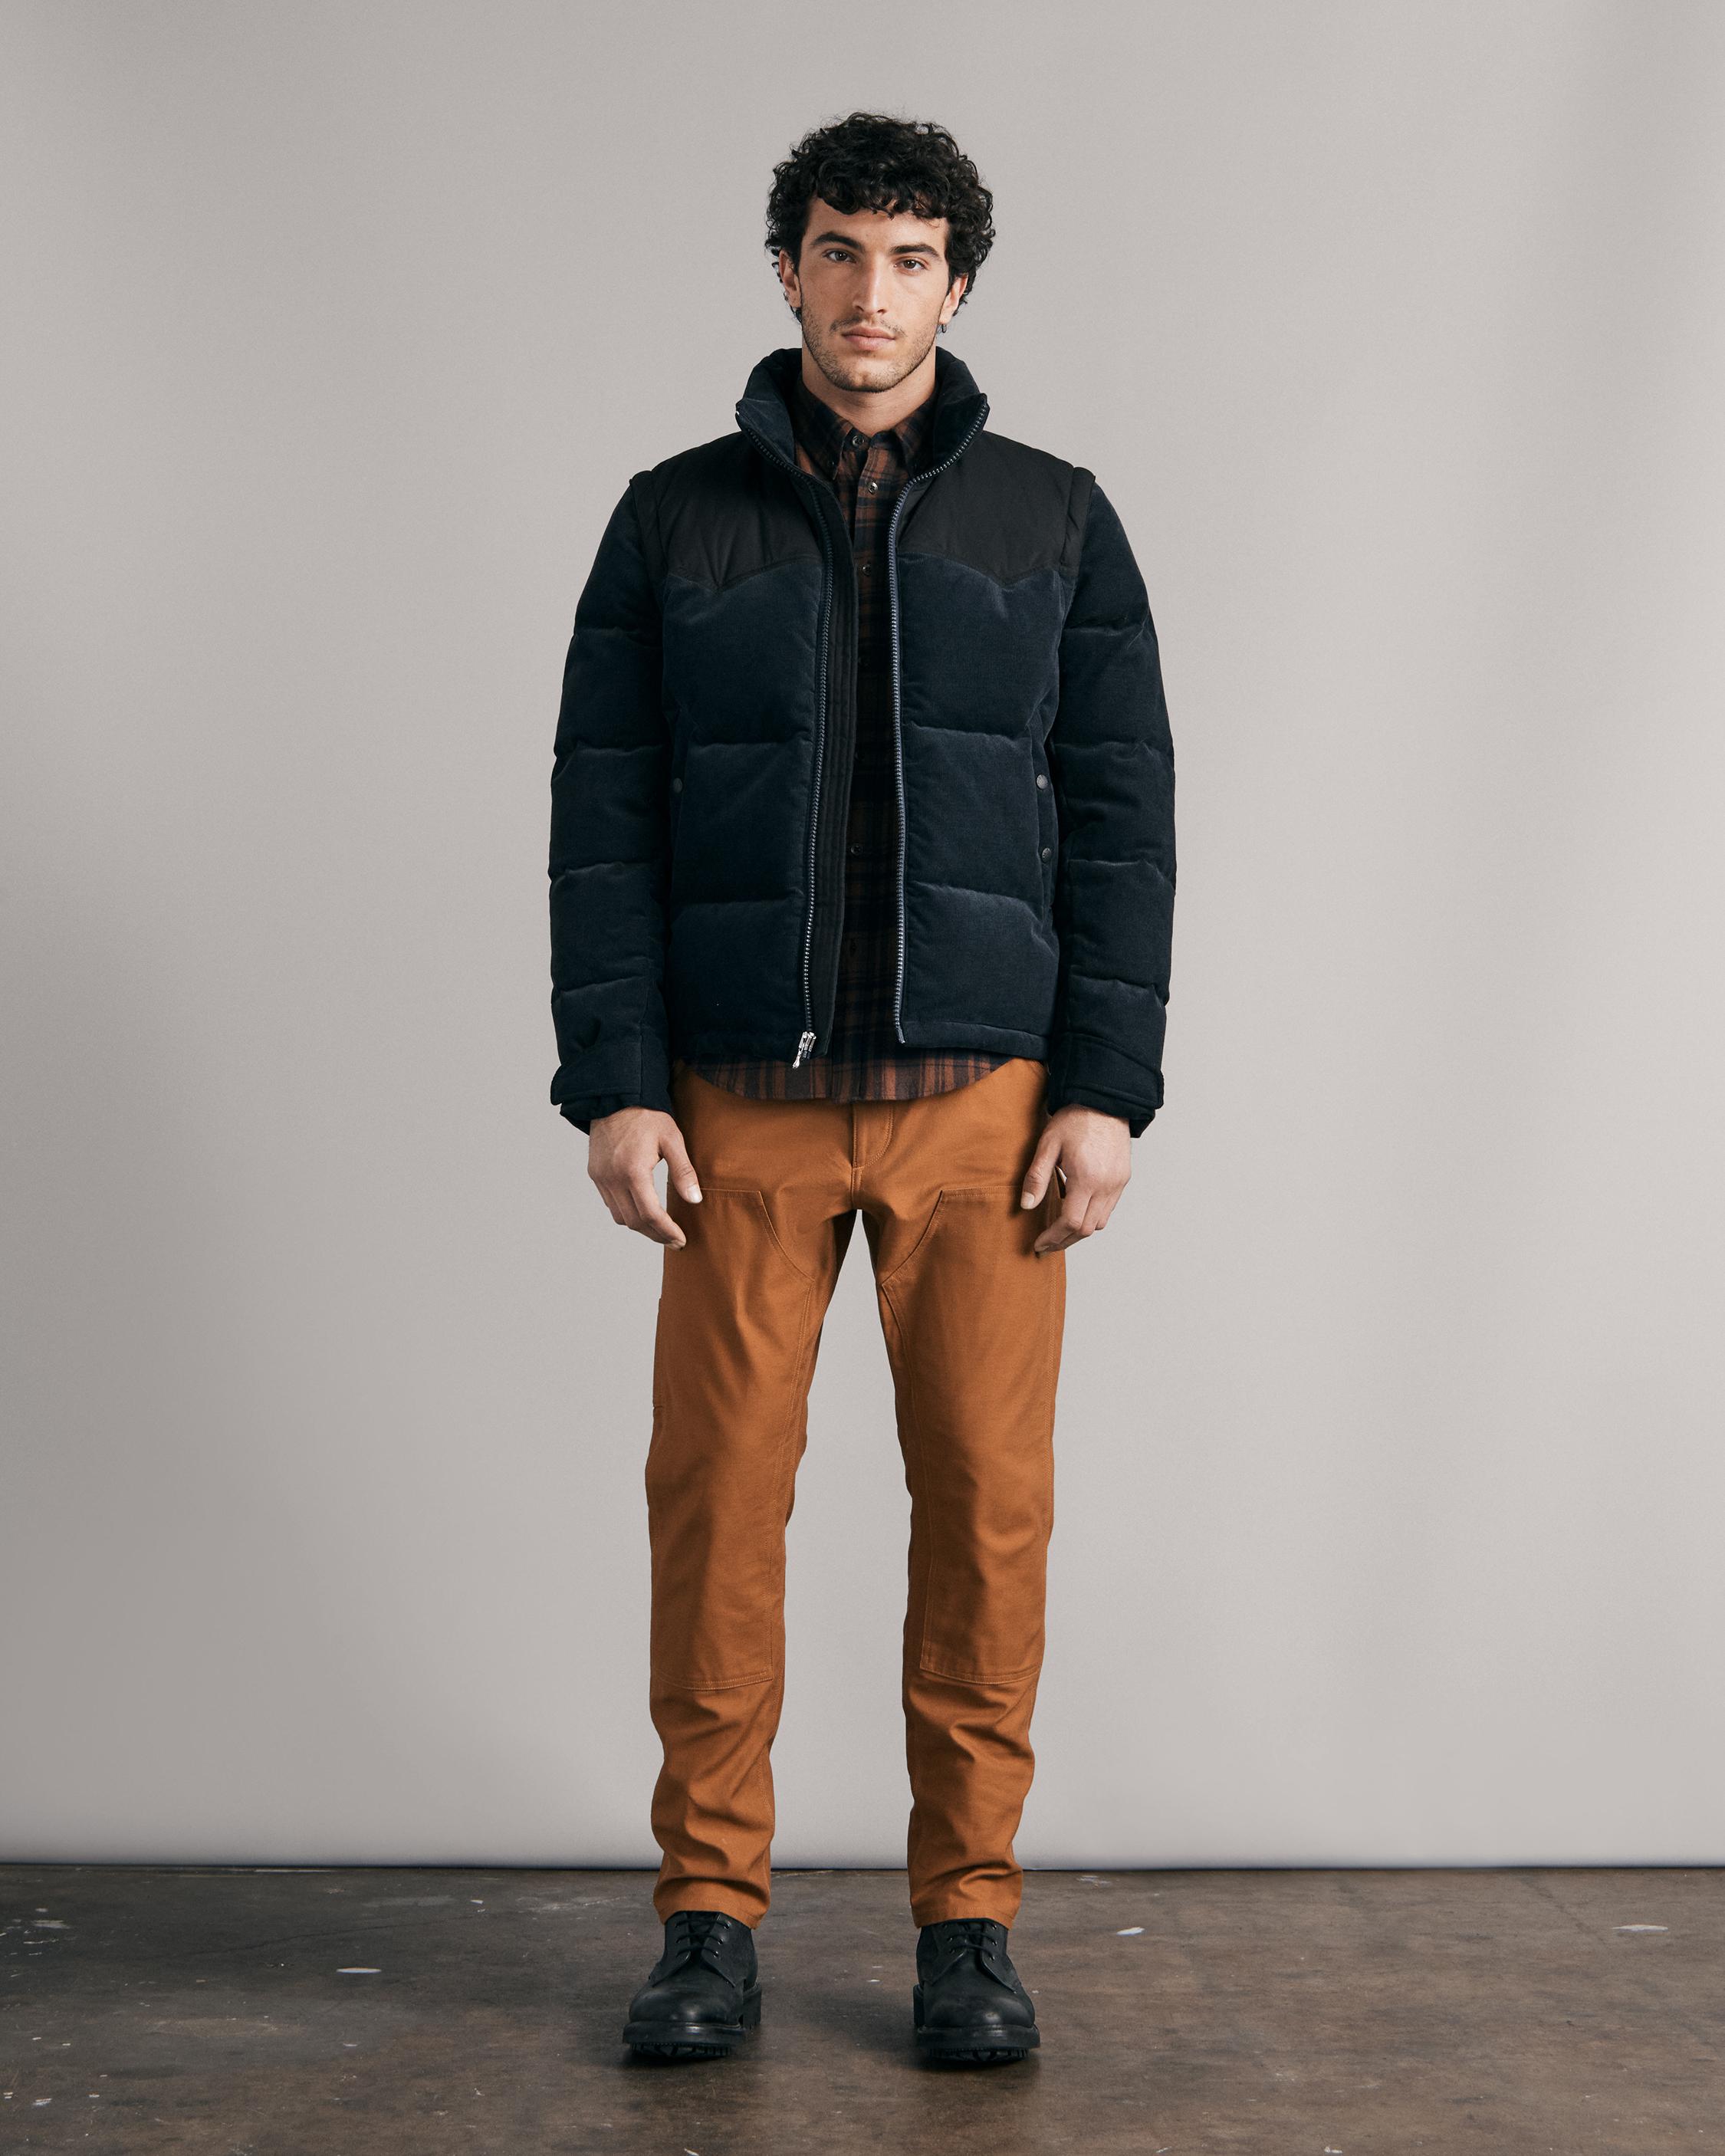 Men's Coats & Jackets: Bomber, Trucker & More | rag & bone